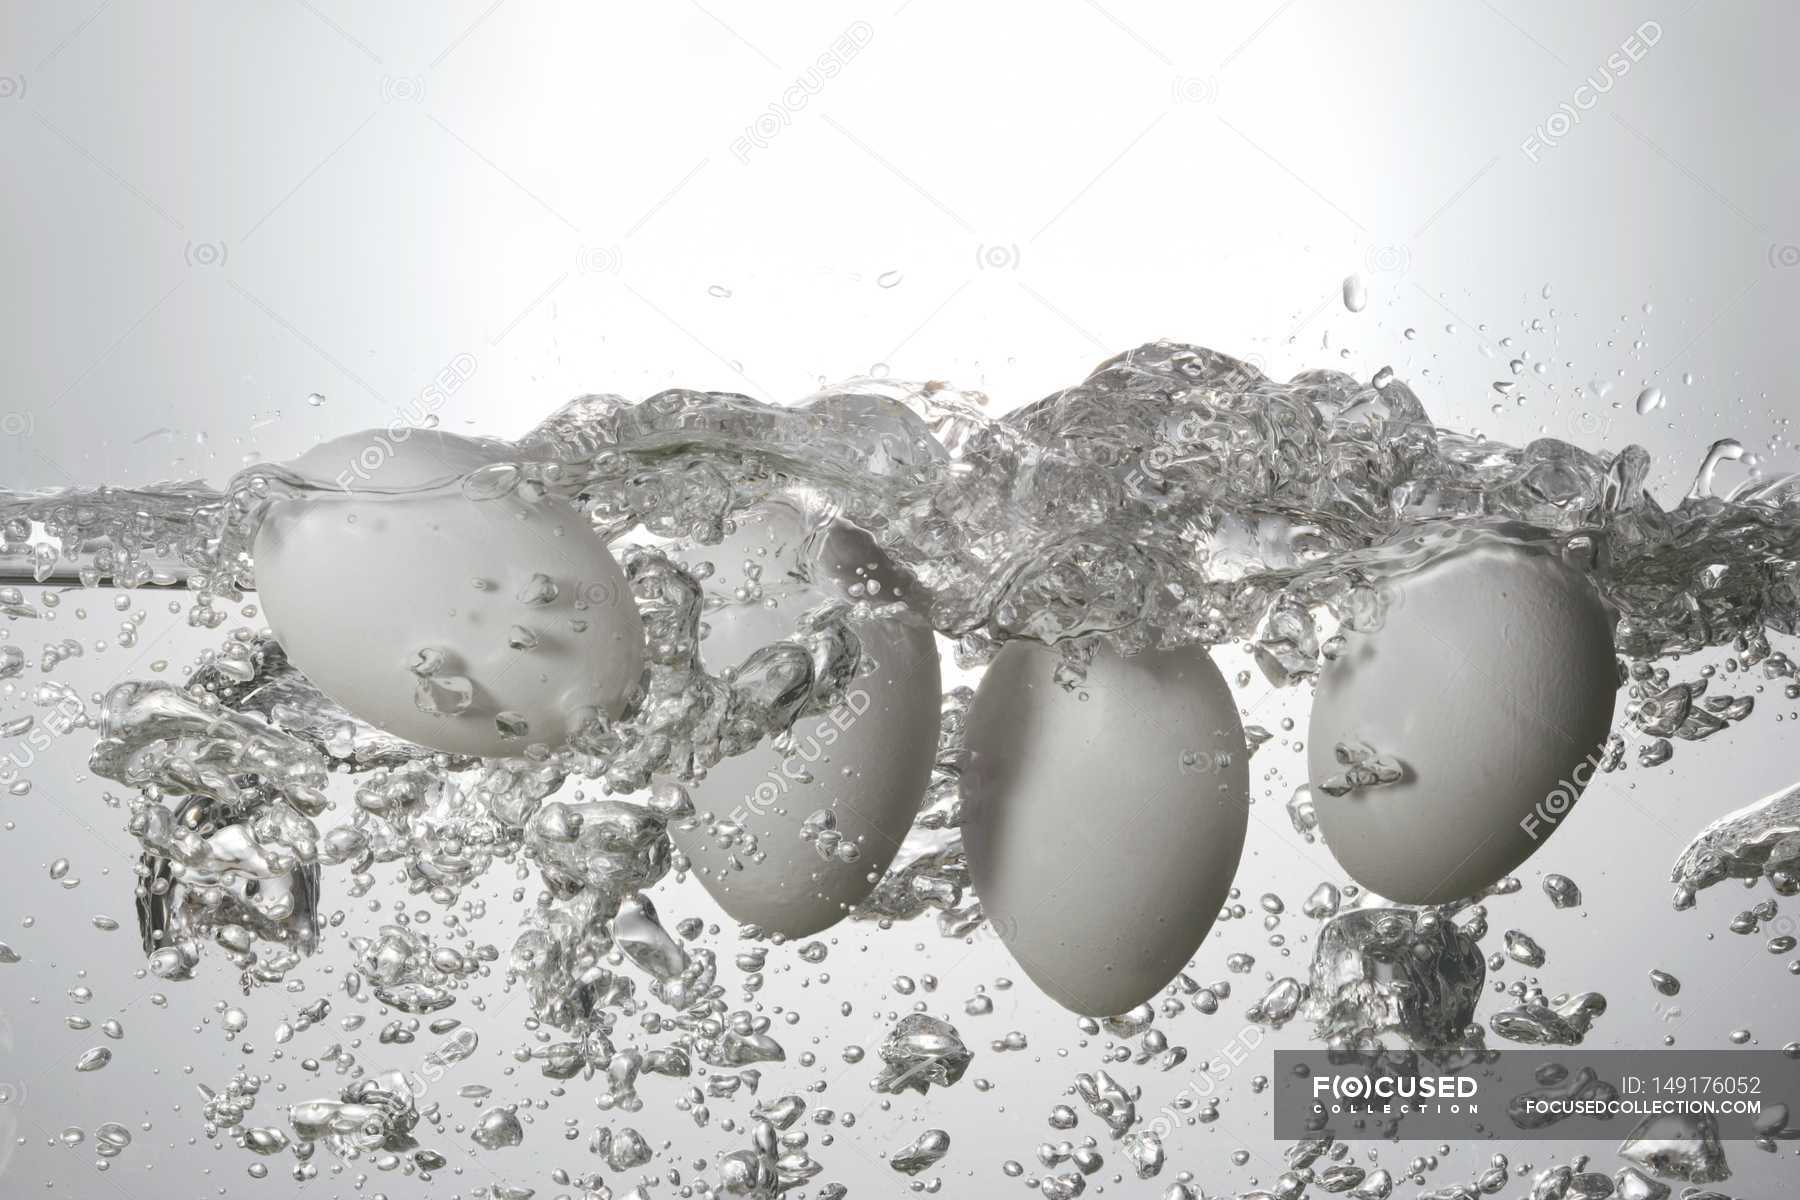 Яйца воде видео. Яйцо в воде. Яйцо плавает в воде. Плавающее яйцо. Белые яйца в воде.